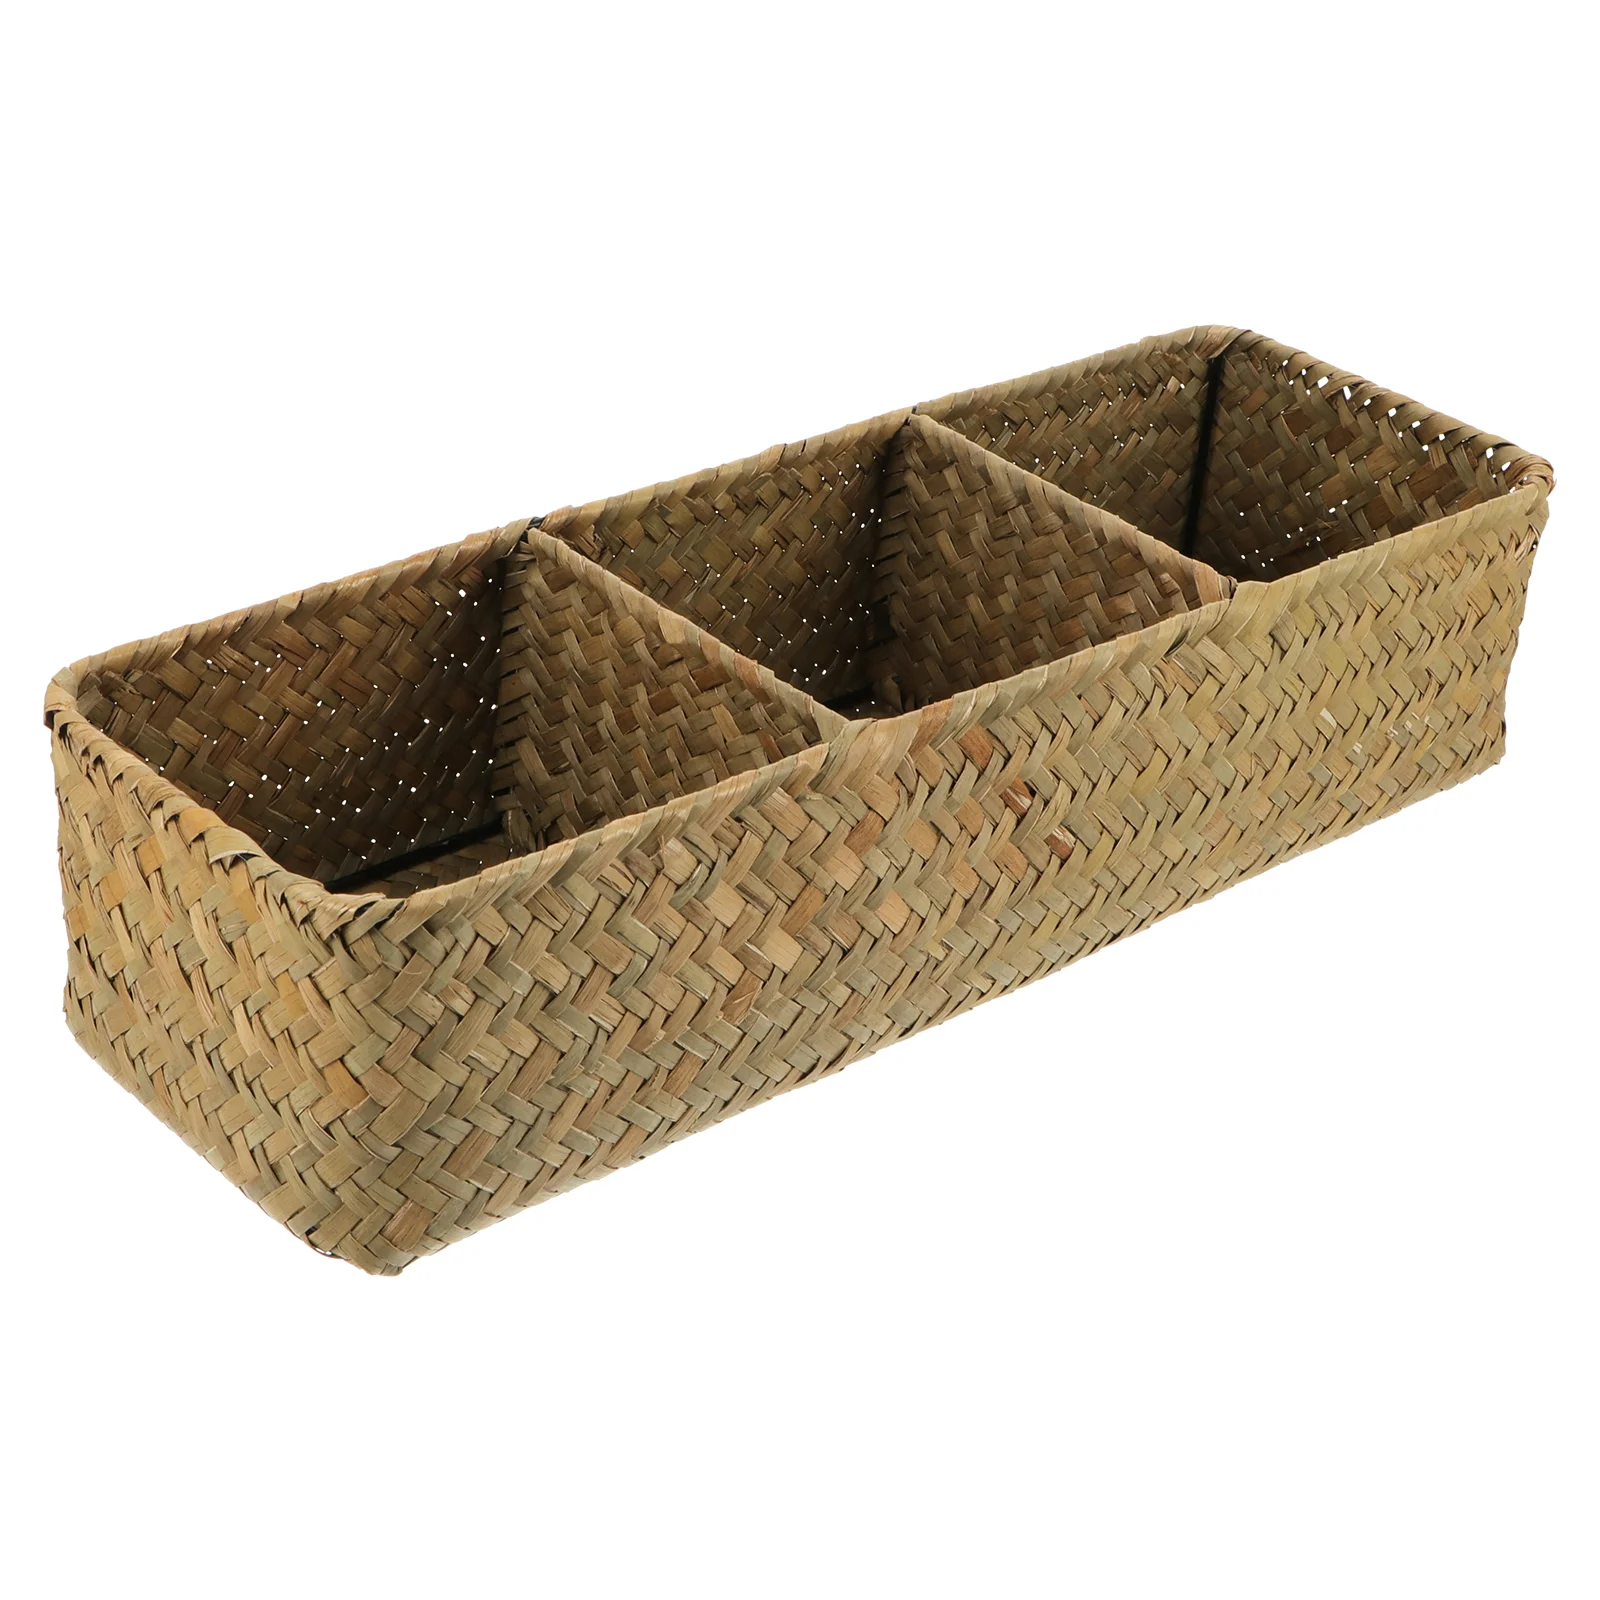 

Basket Storage Woven Baskets Wicker Organizer Seagrass Rattan Box Bathroom Bins Toilet Hand Bin Tray Shelf Decorative Makeup